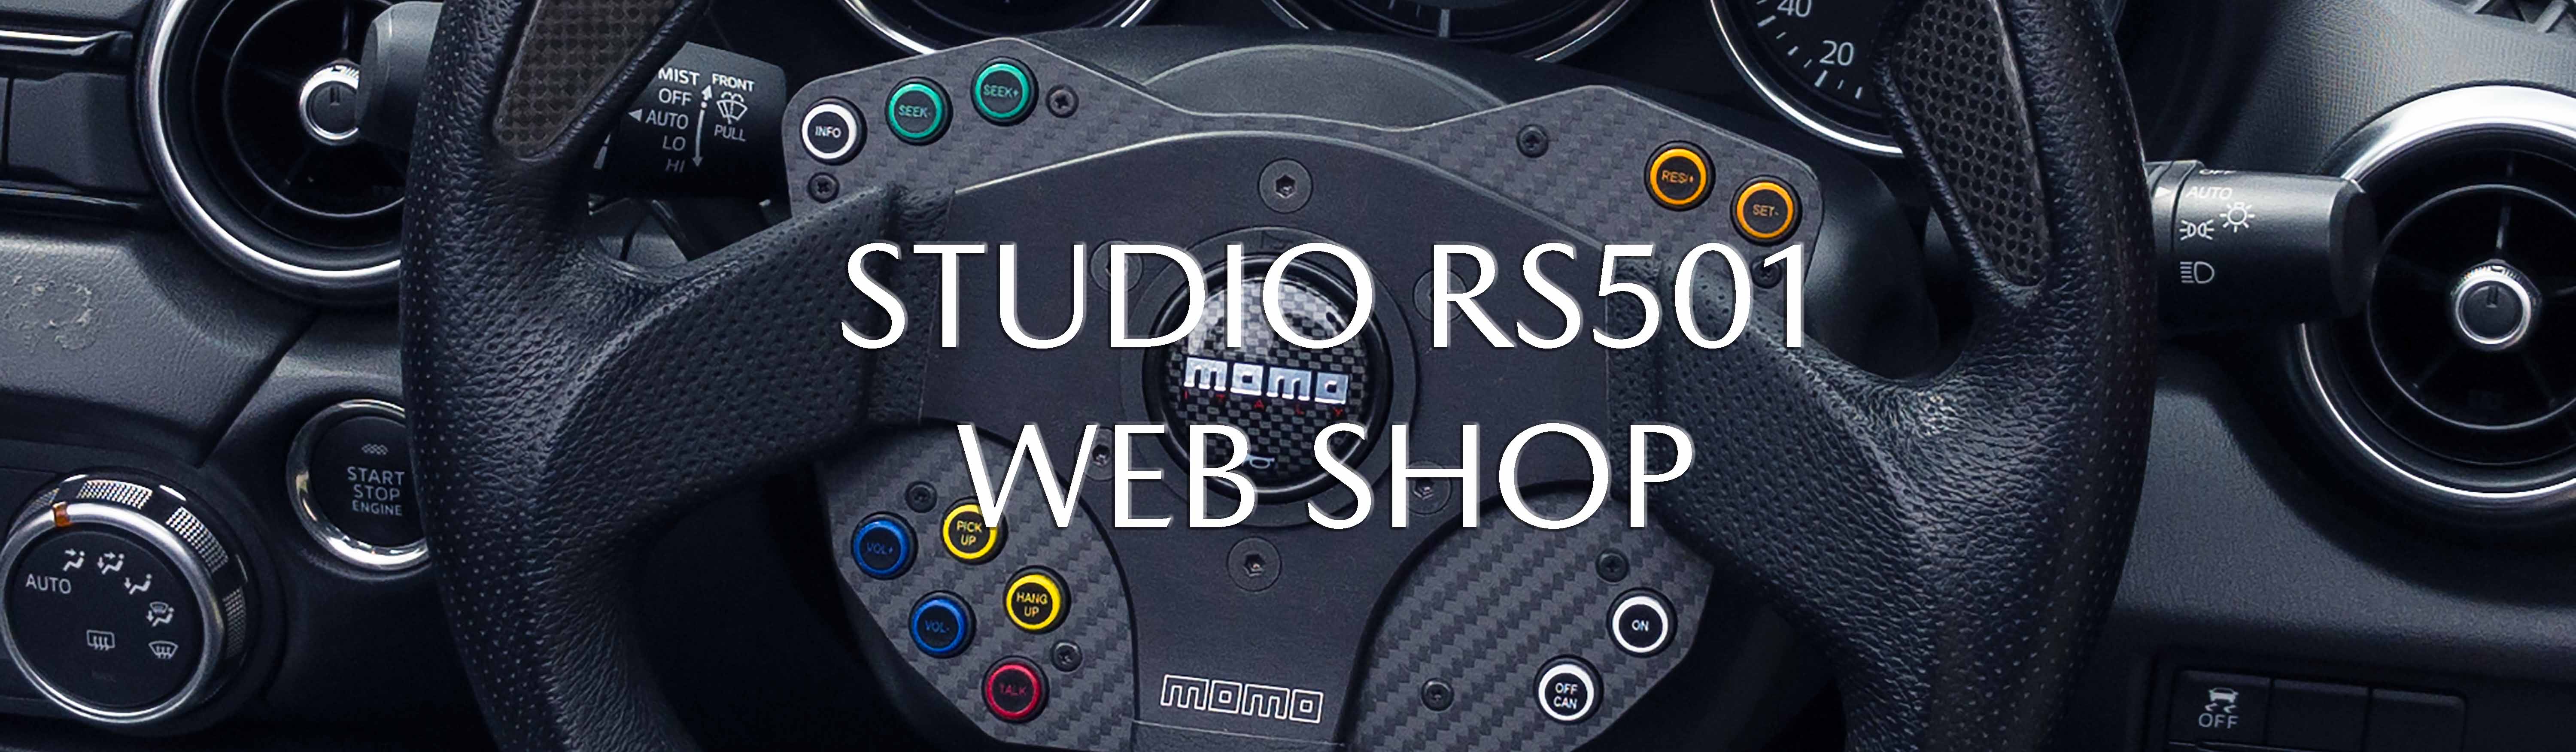 studio rs501 web shop